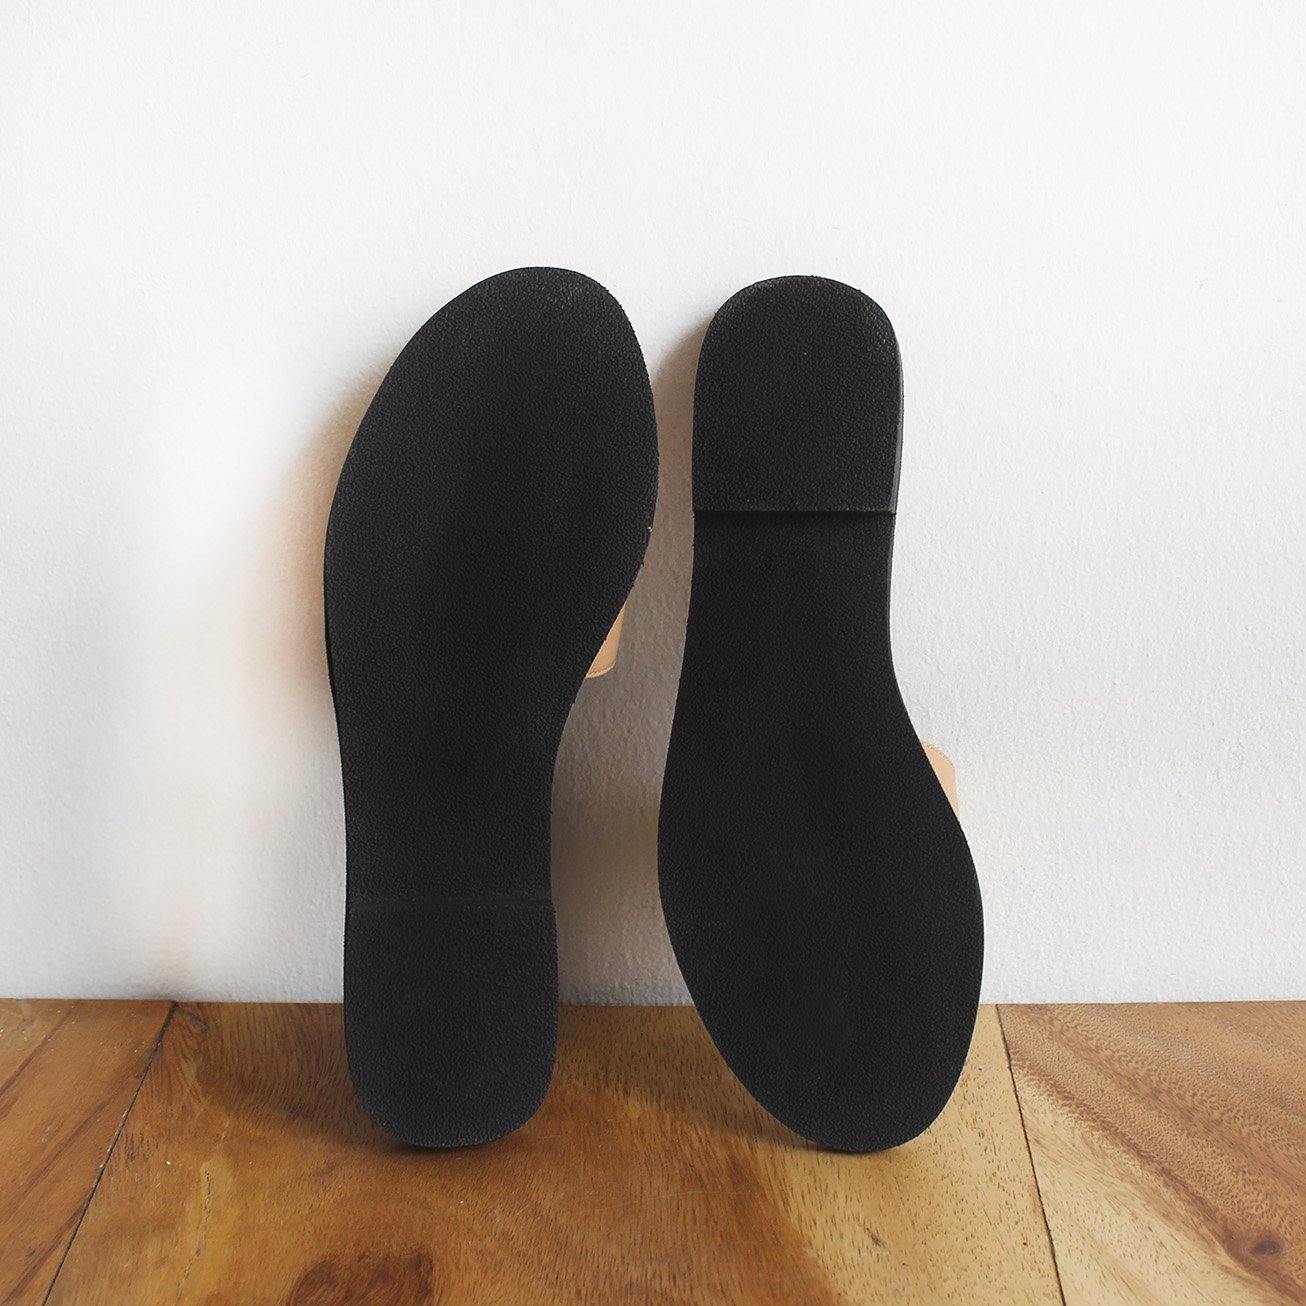 Asymmetrical Sandals (5 pairs per set) - Risque Manufacturing